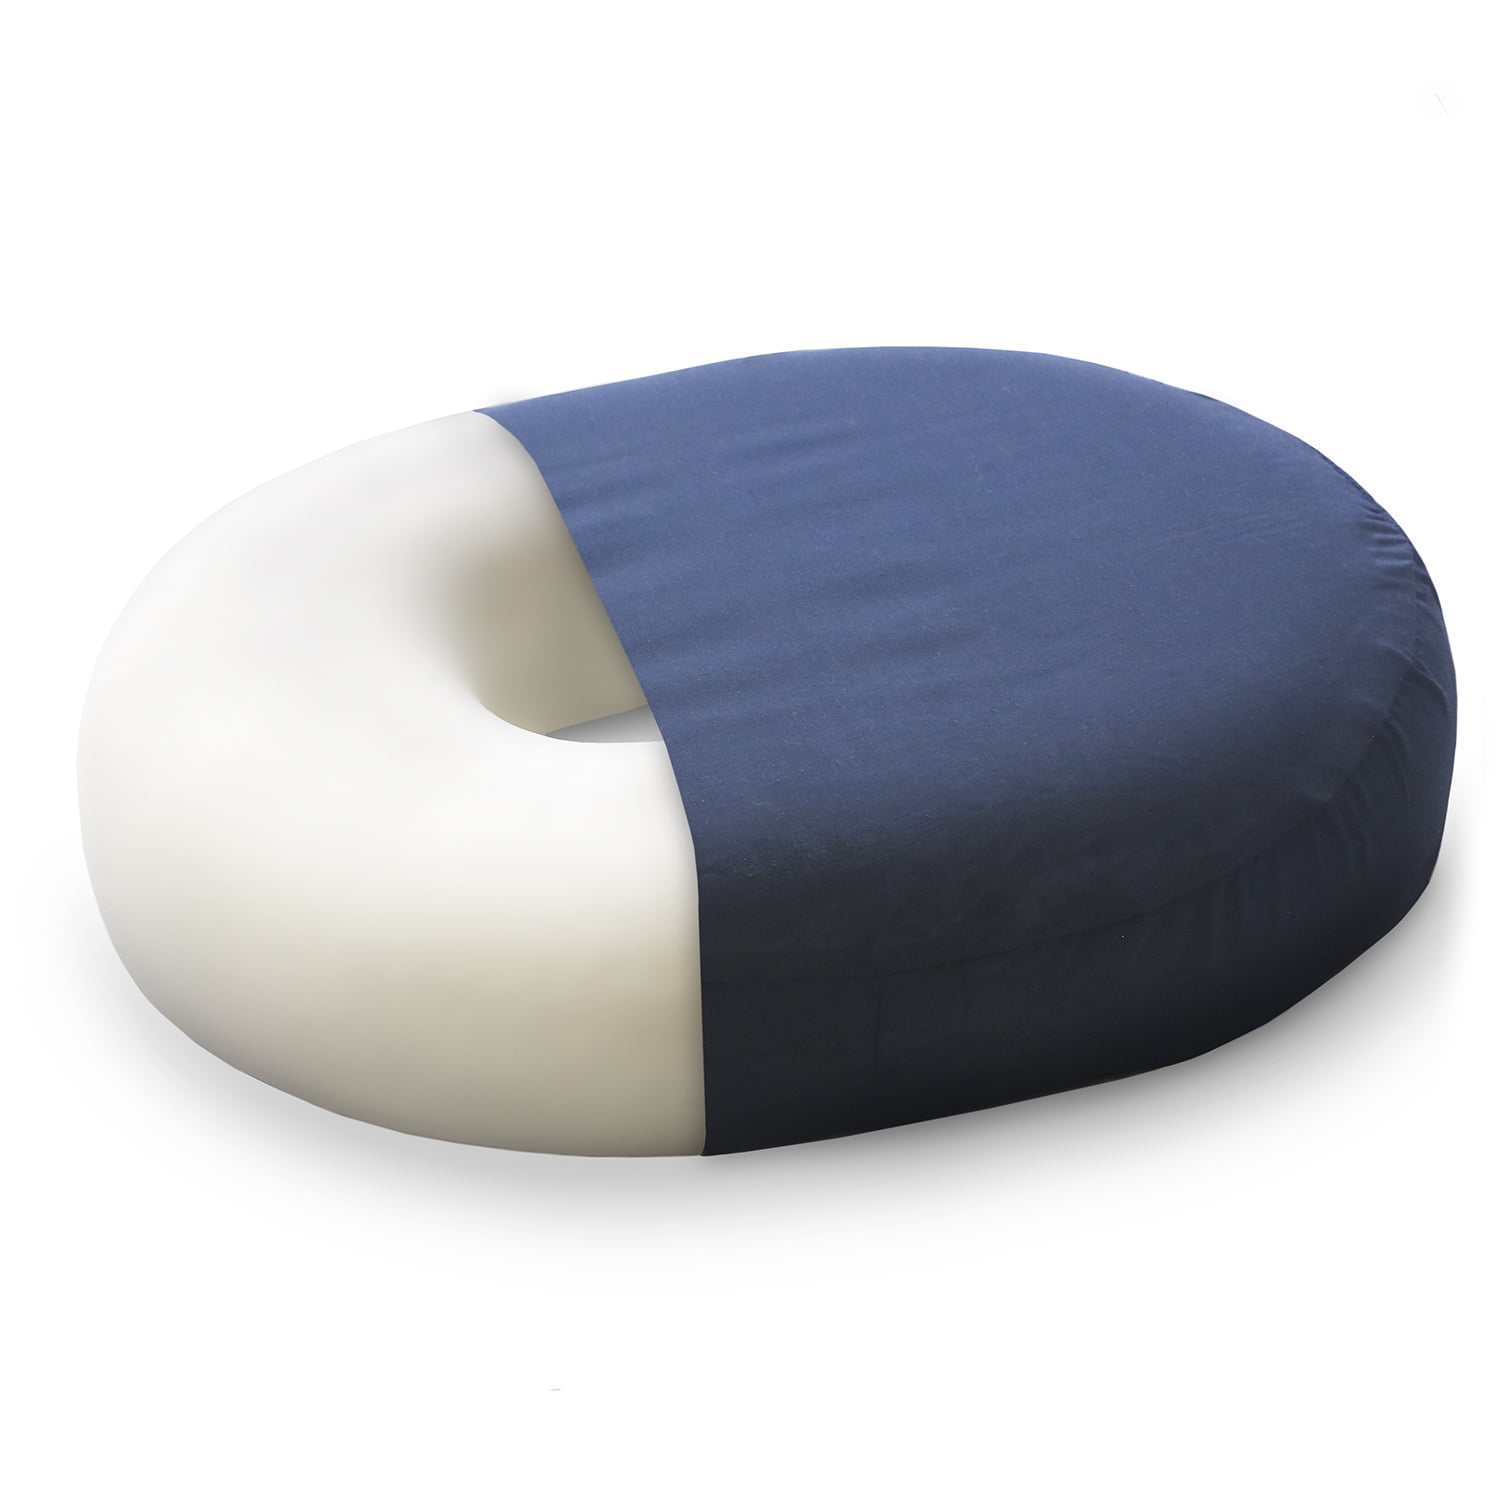 coccyx ring donut cushion